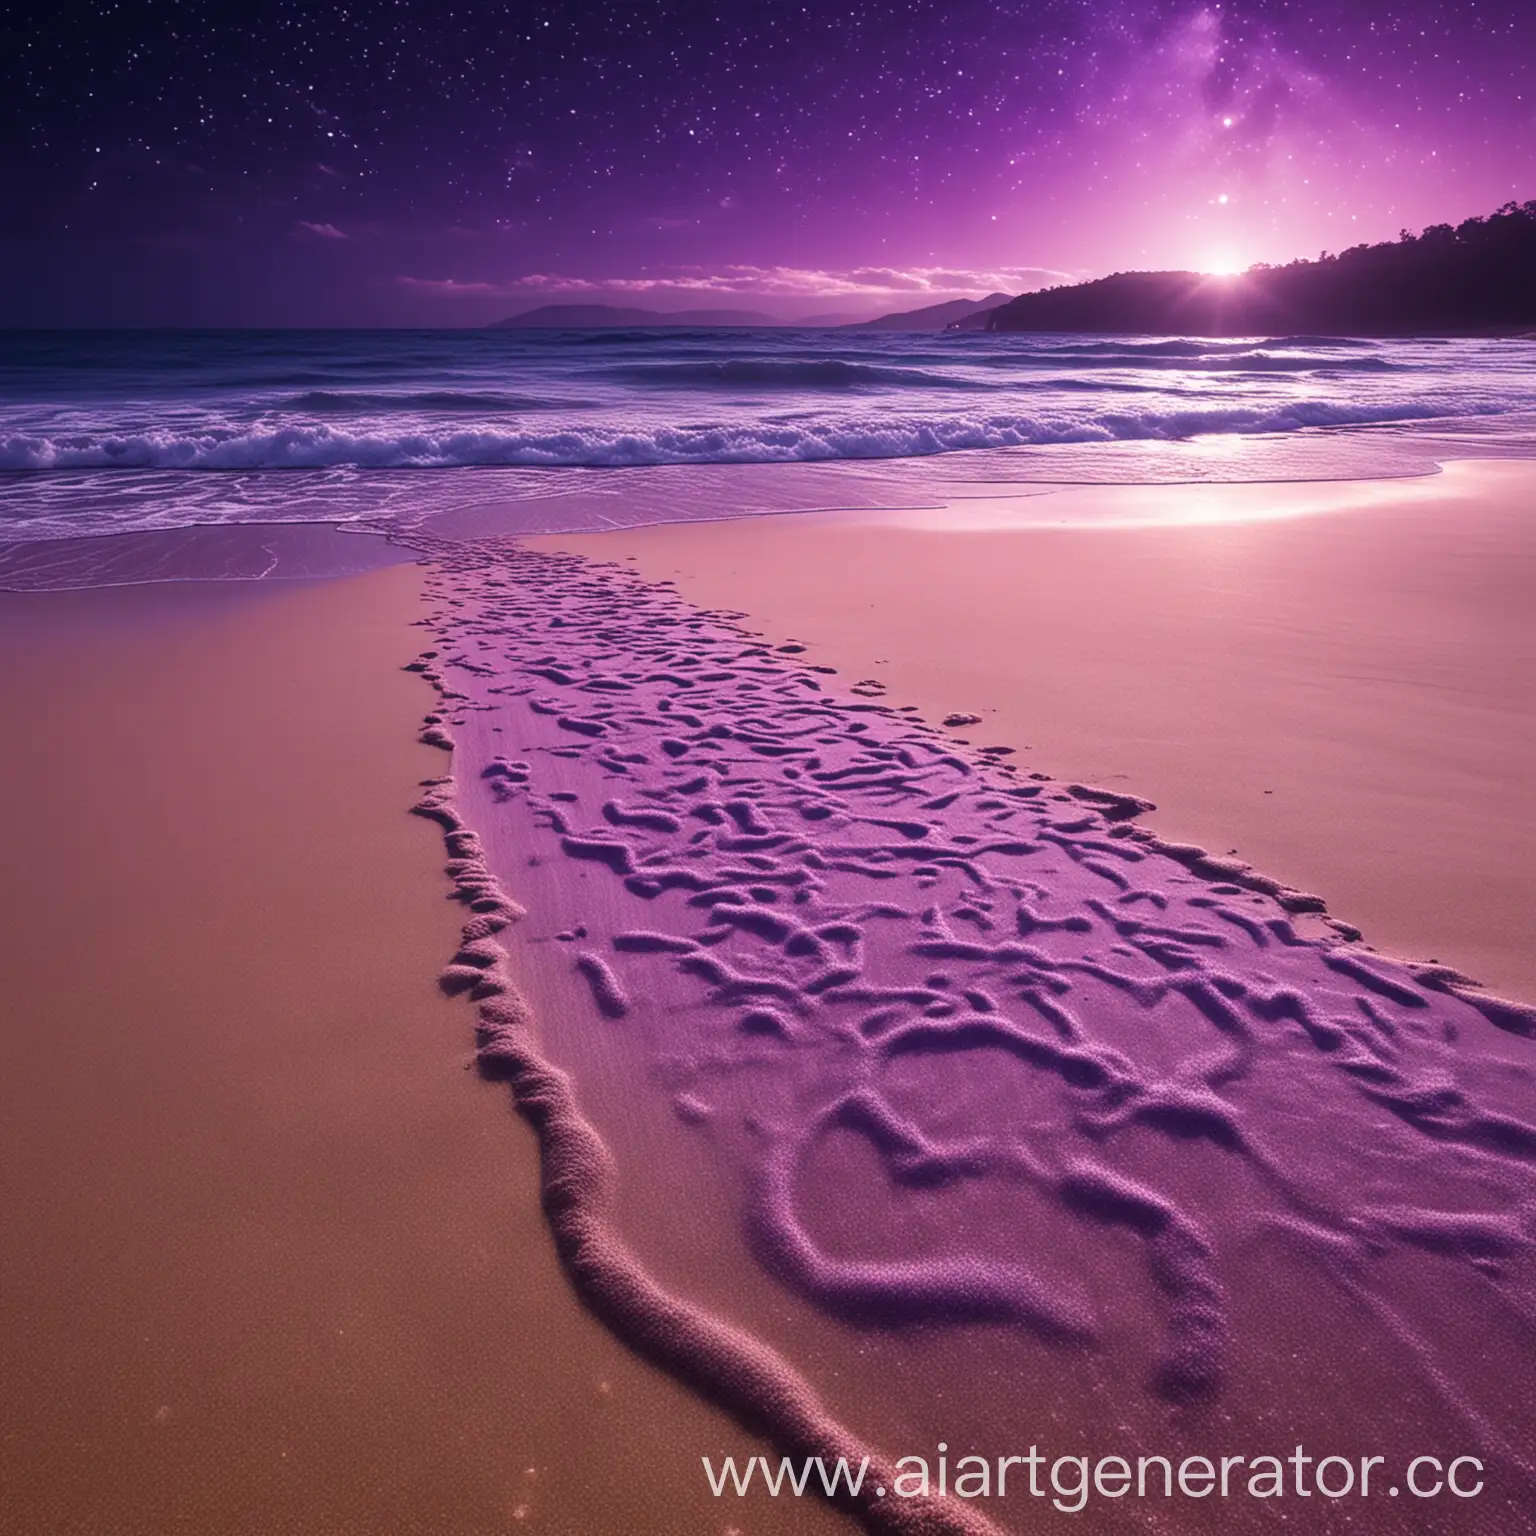 purple night beach with shining sand